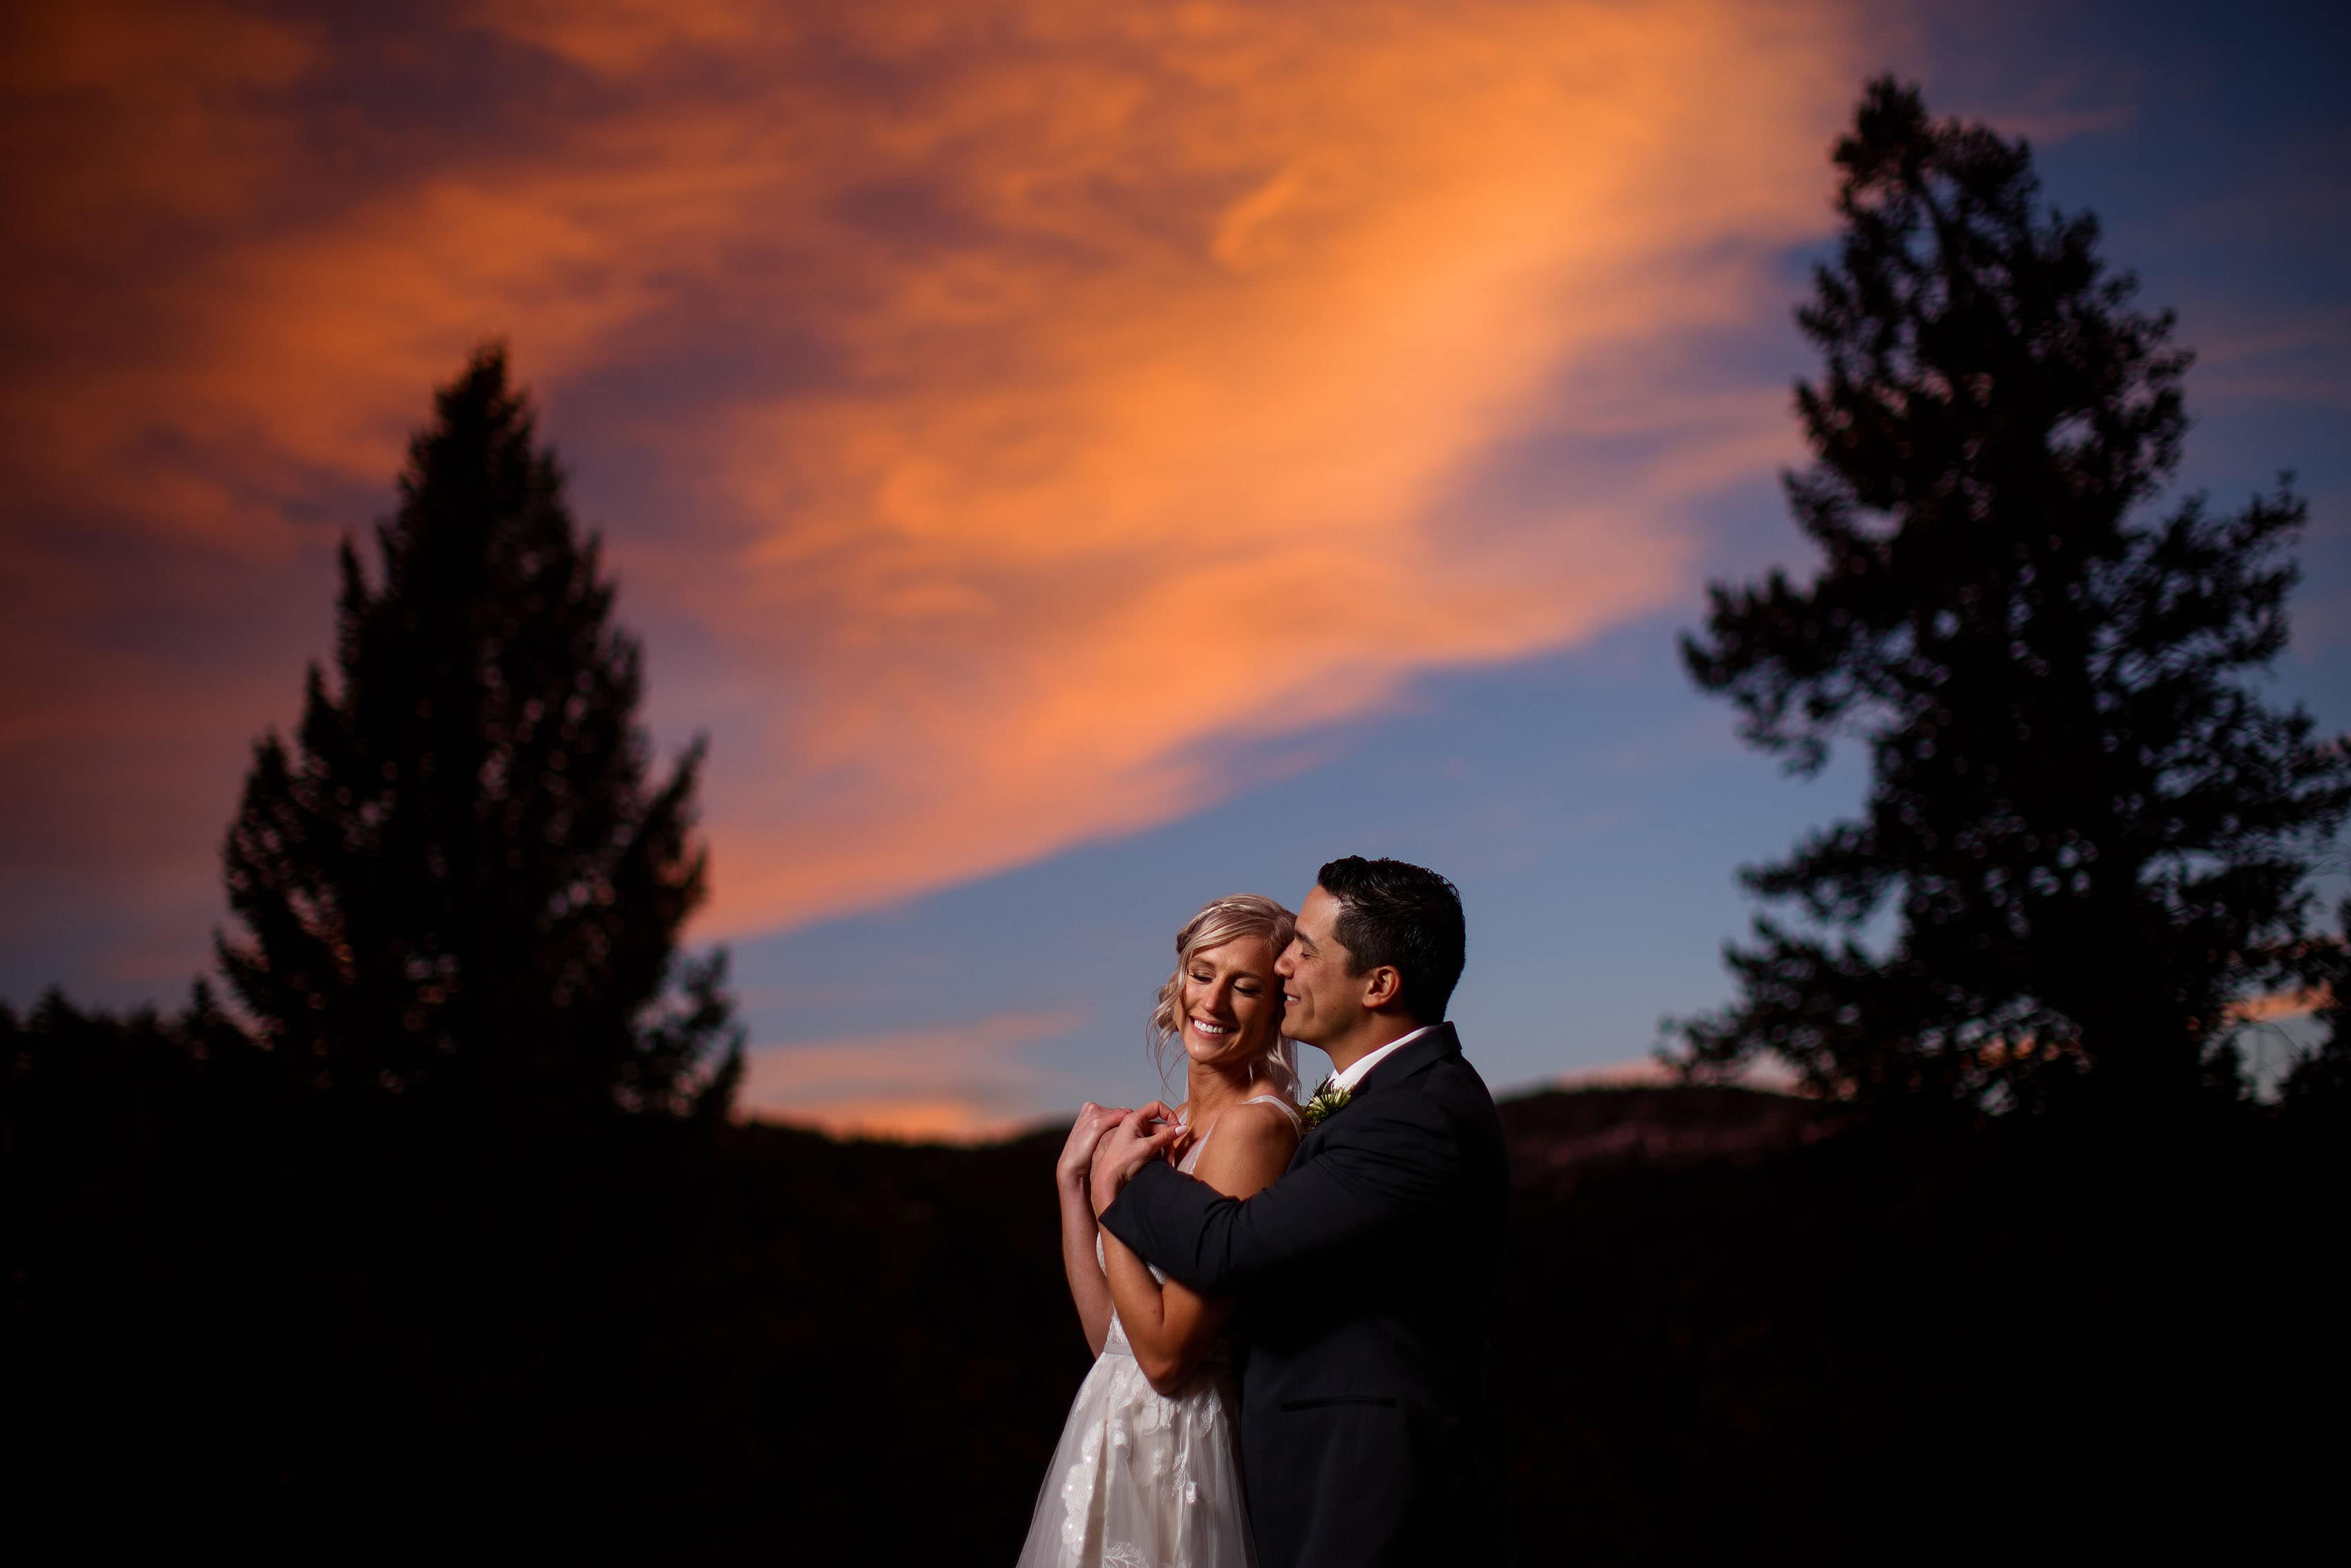 Lindsey and Josh embrace during sunset at Woodlands wedding venue in Morrison, CO